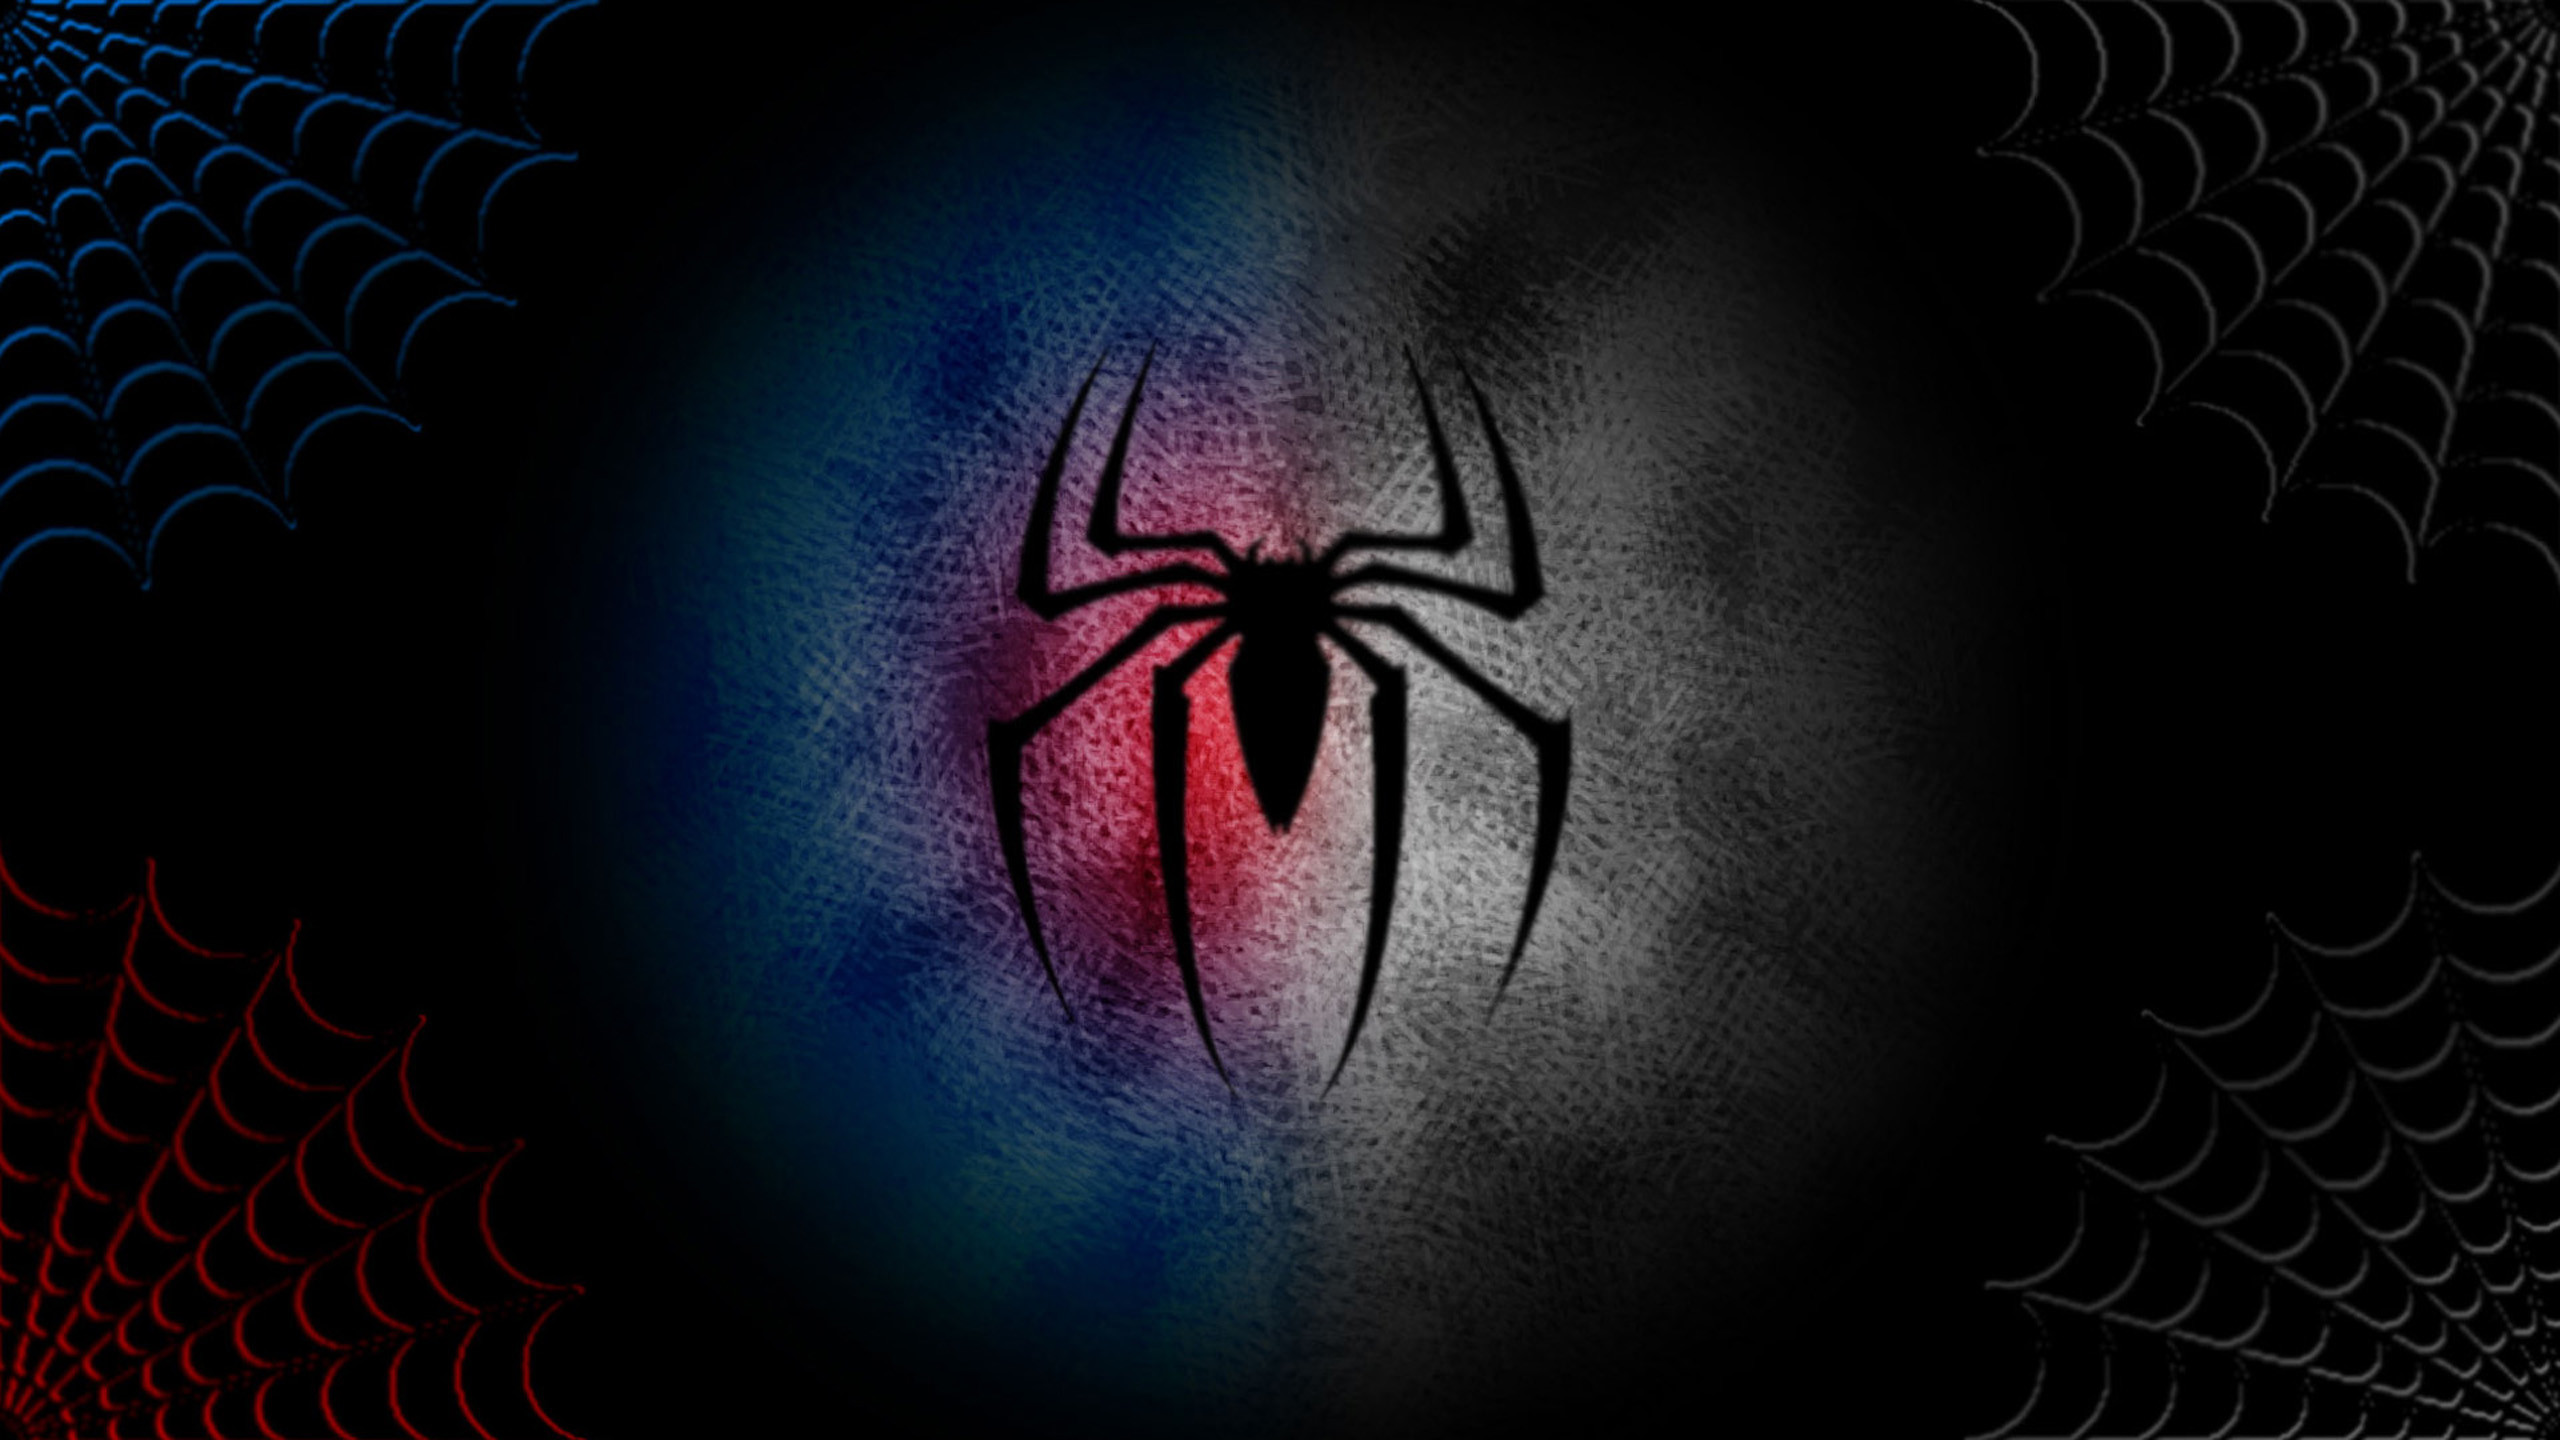  Spiderman  Logo  Wallpaper    WallpaperTag